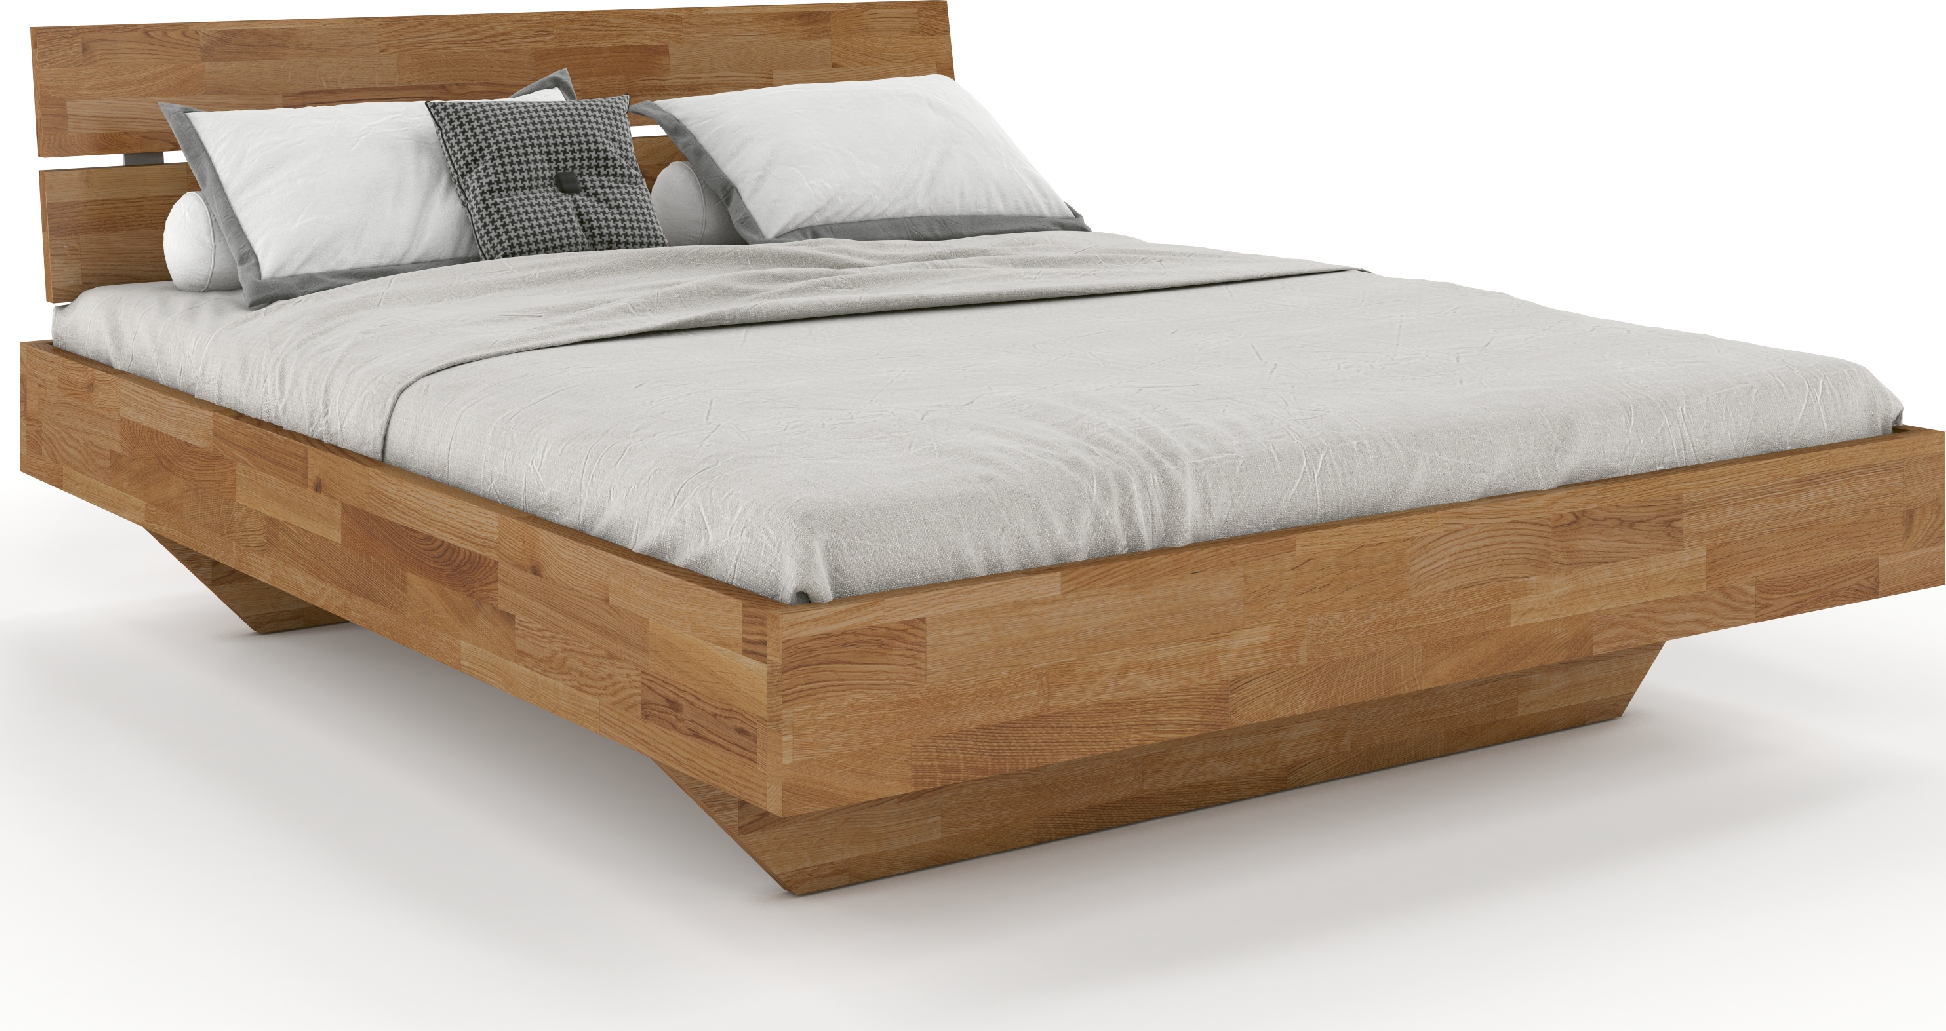 Dubová postel Fred Style 180x200 cm, dub, masiv